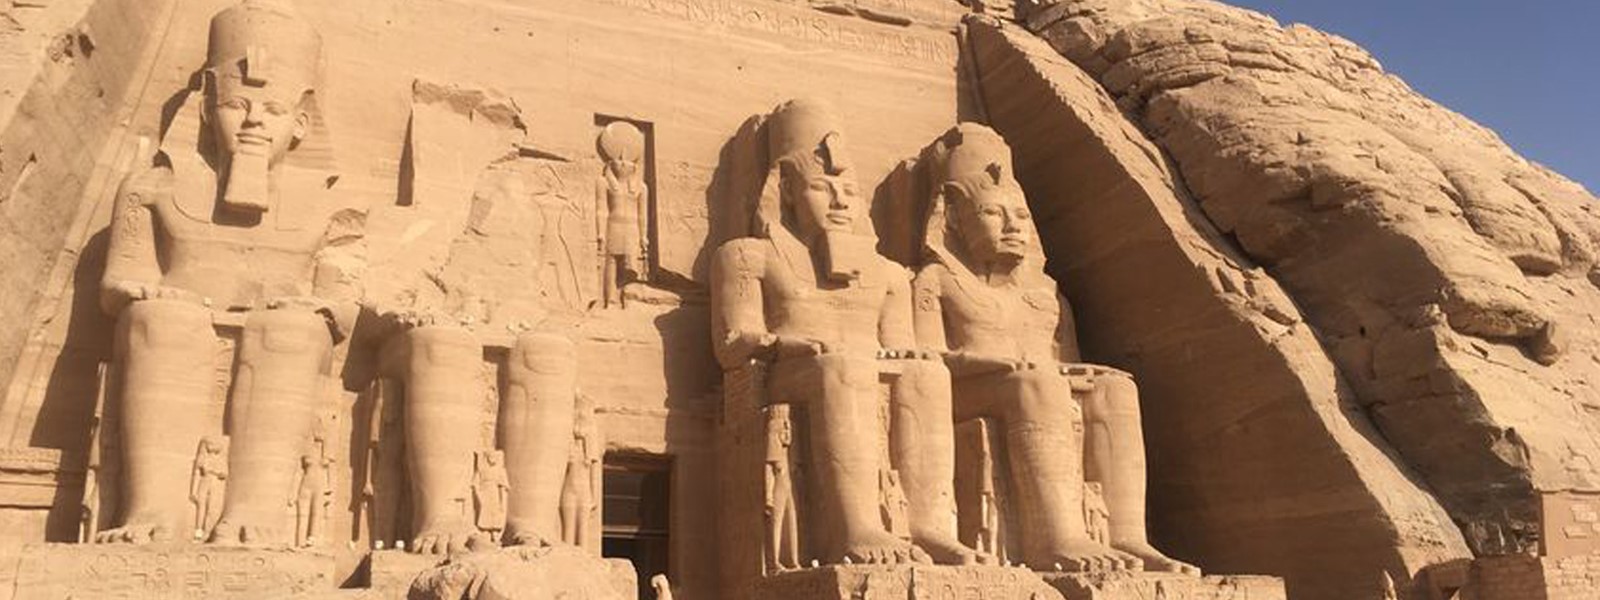 Geotours Abu Simbel Egypt_28f5a_lg.jpg Banner